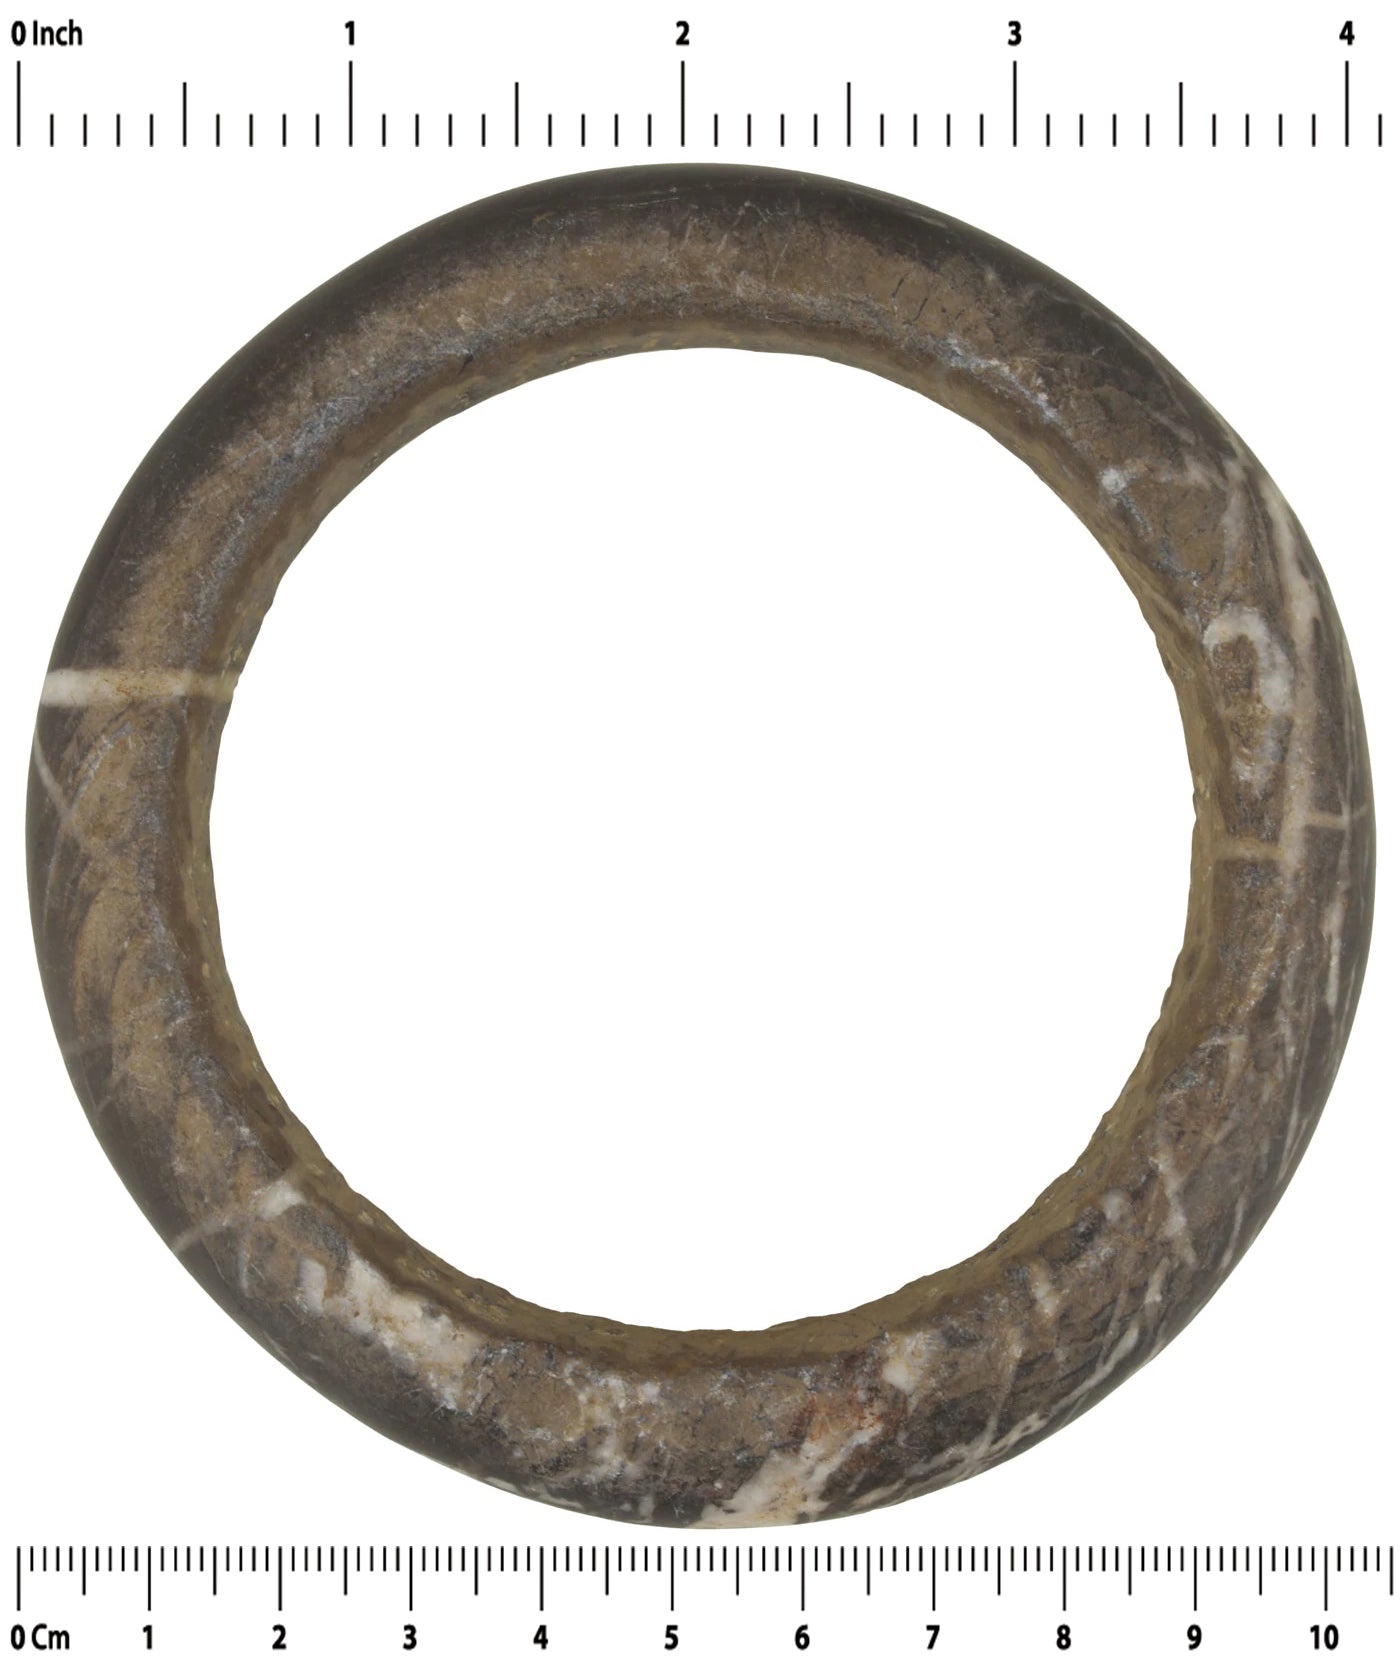 Antique West African stone granite bracelet Armband Currency Mali Dogon Sahara - Tribalgh